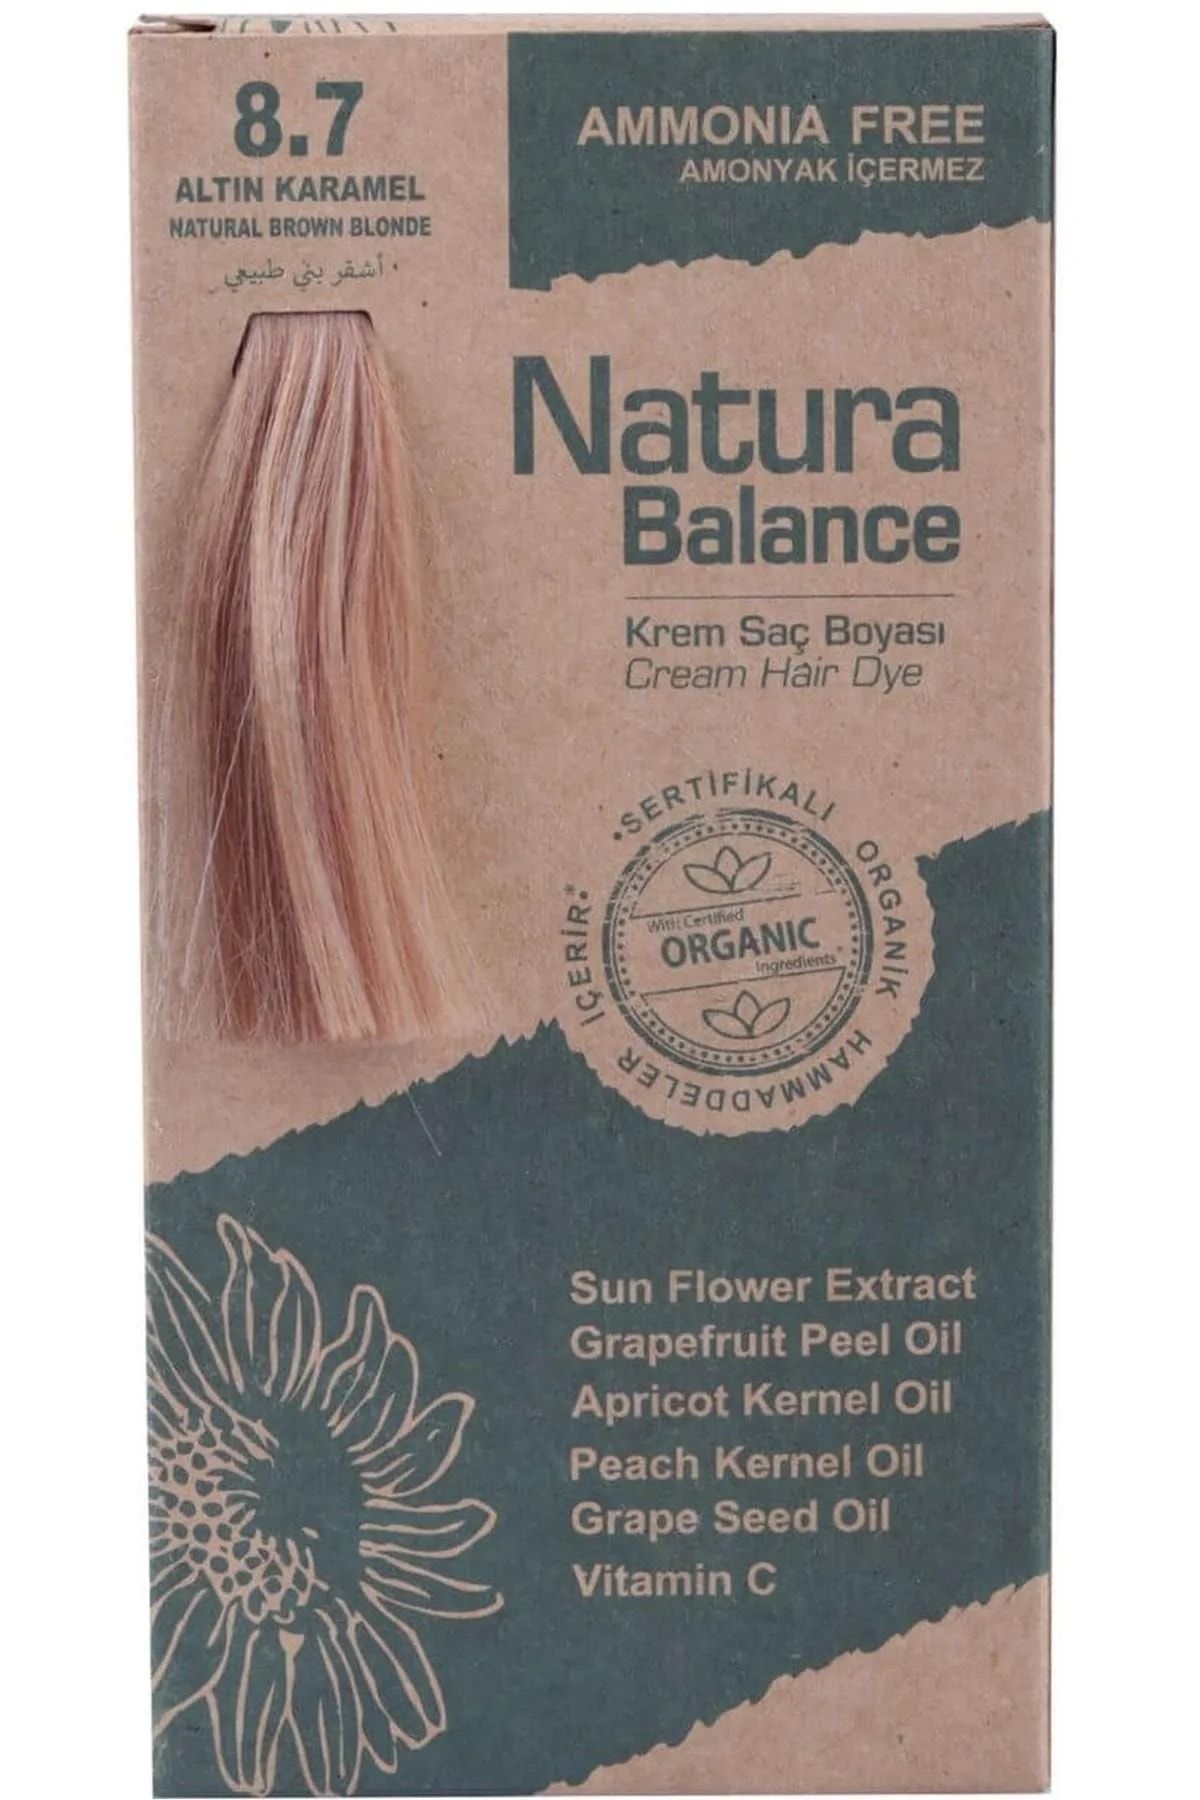 NATURABALANCE Natura Balance 8.7 Altın Karamel Organik Krem Saç Boyası